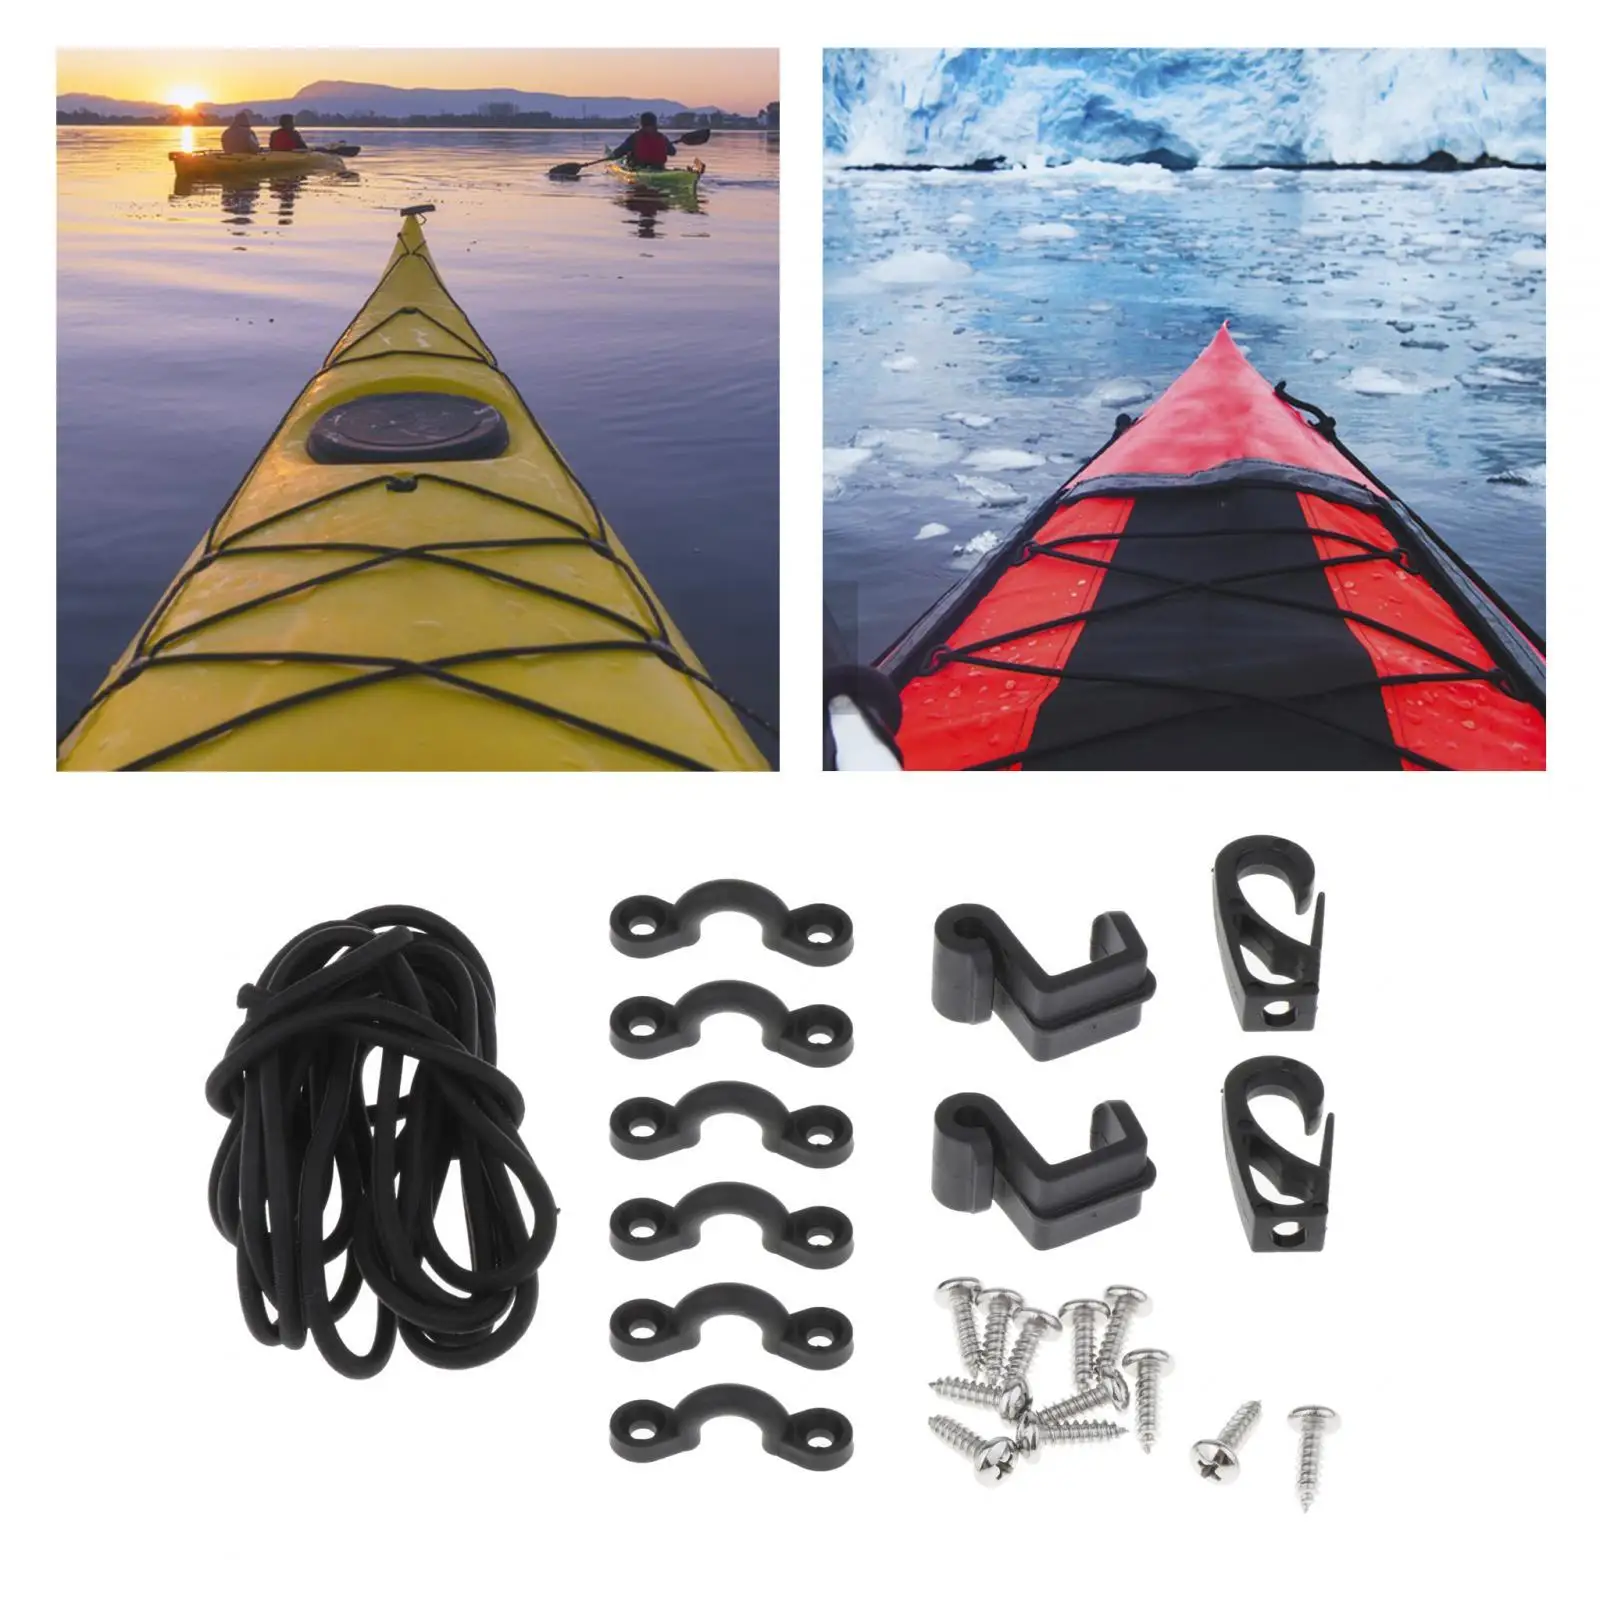 Deck Rigging Set Boat Canoes Kayak Rigging Boat Premium Kayak Accessories with 12 Screws Tie Down Pad Eye with Bungee Cord Hooks